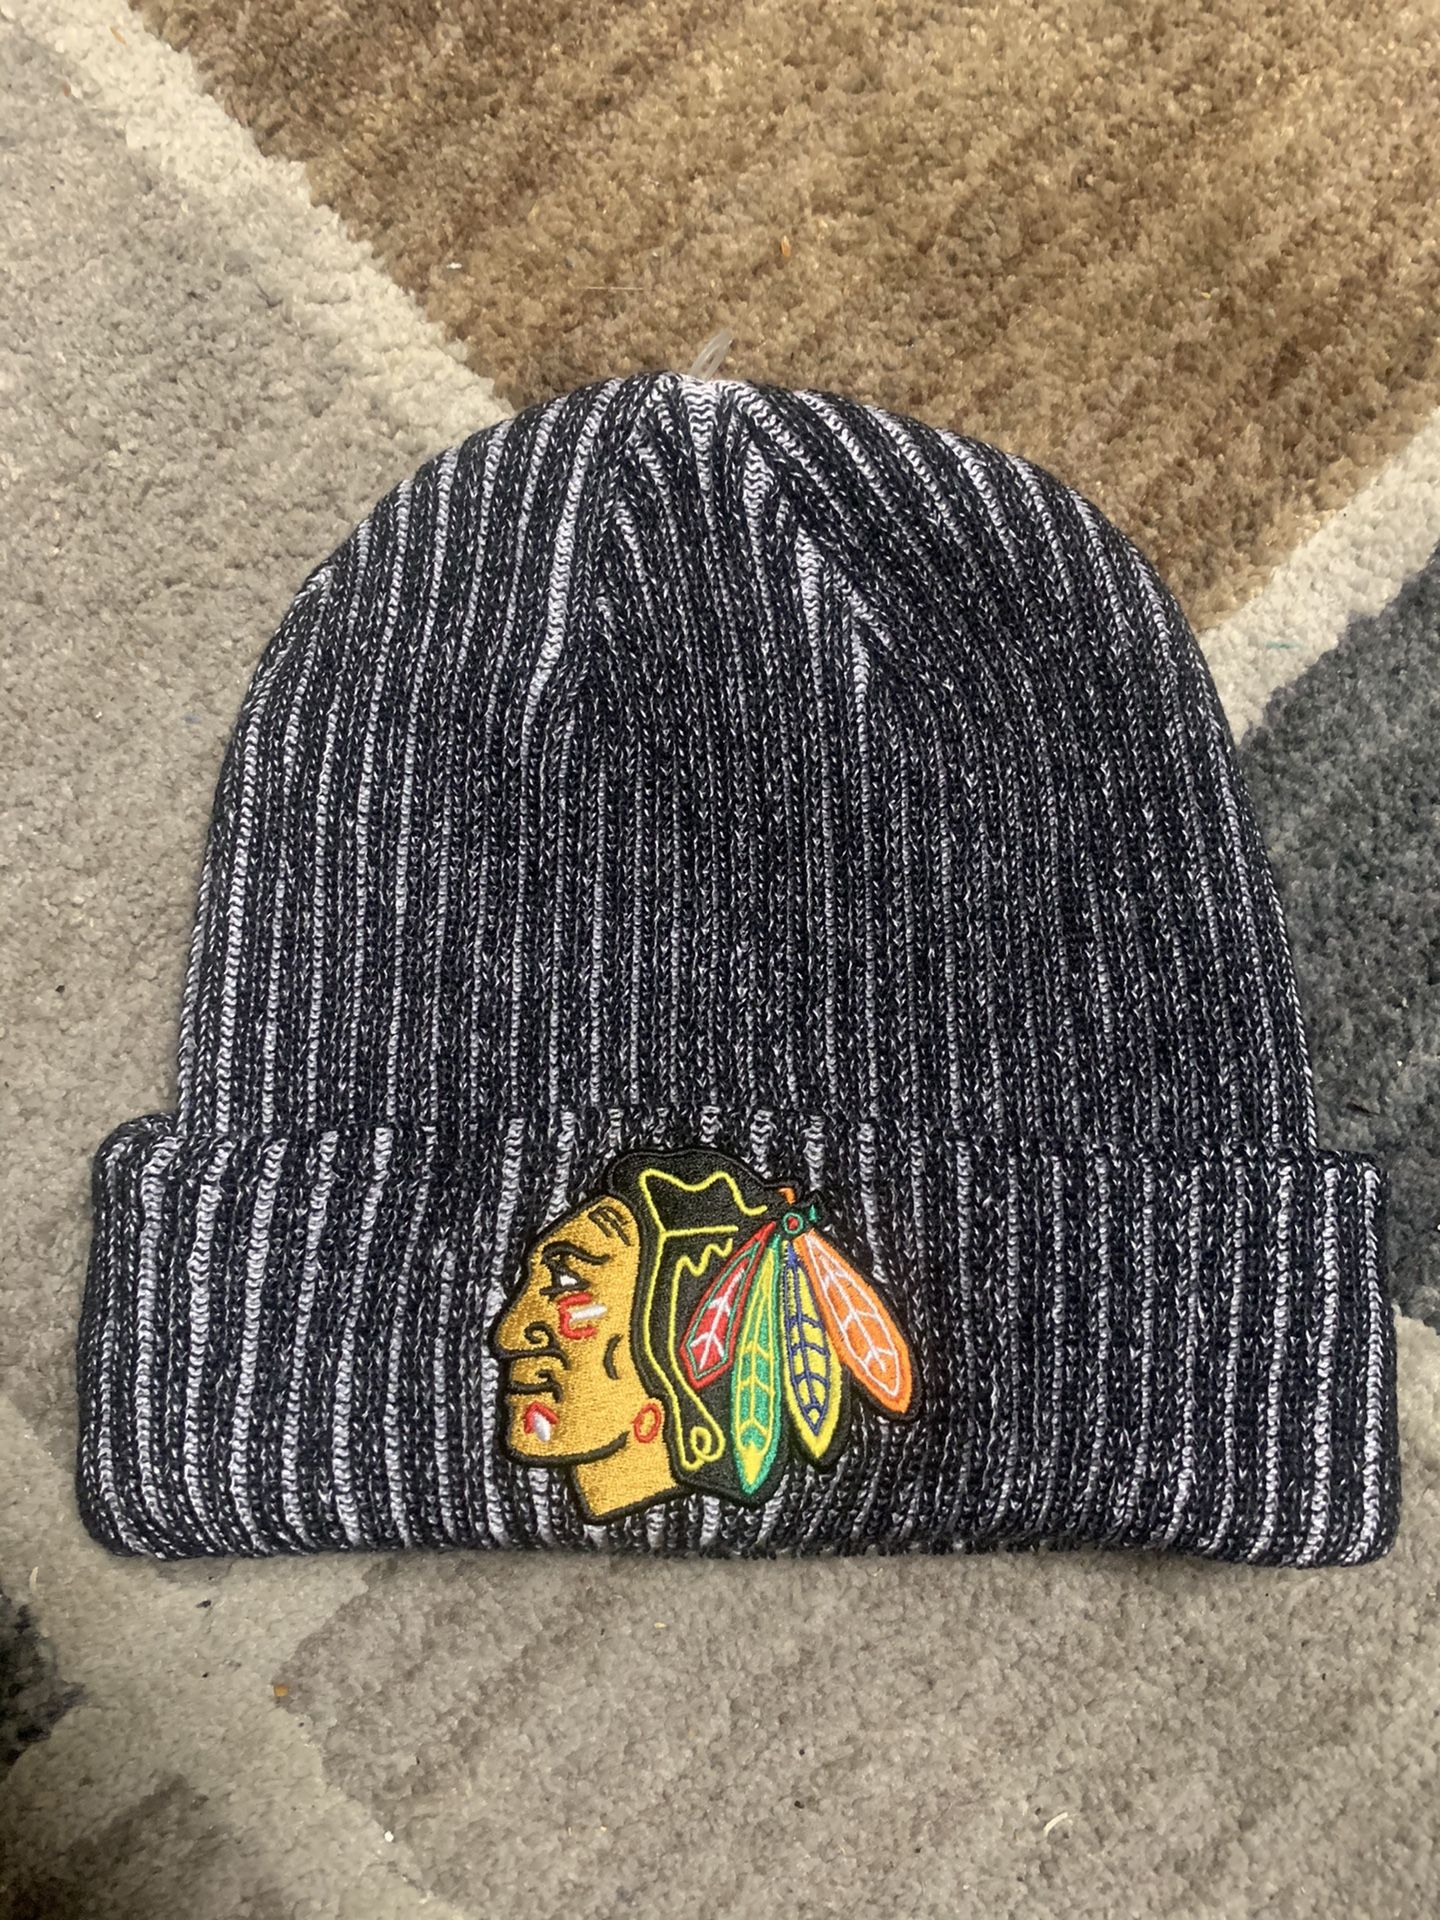 Chicago Blackhawks Fanatics Knit Hat